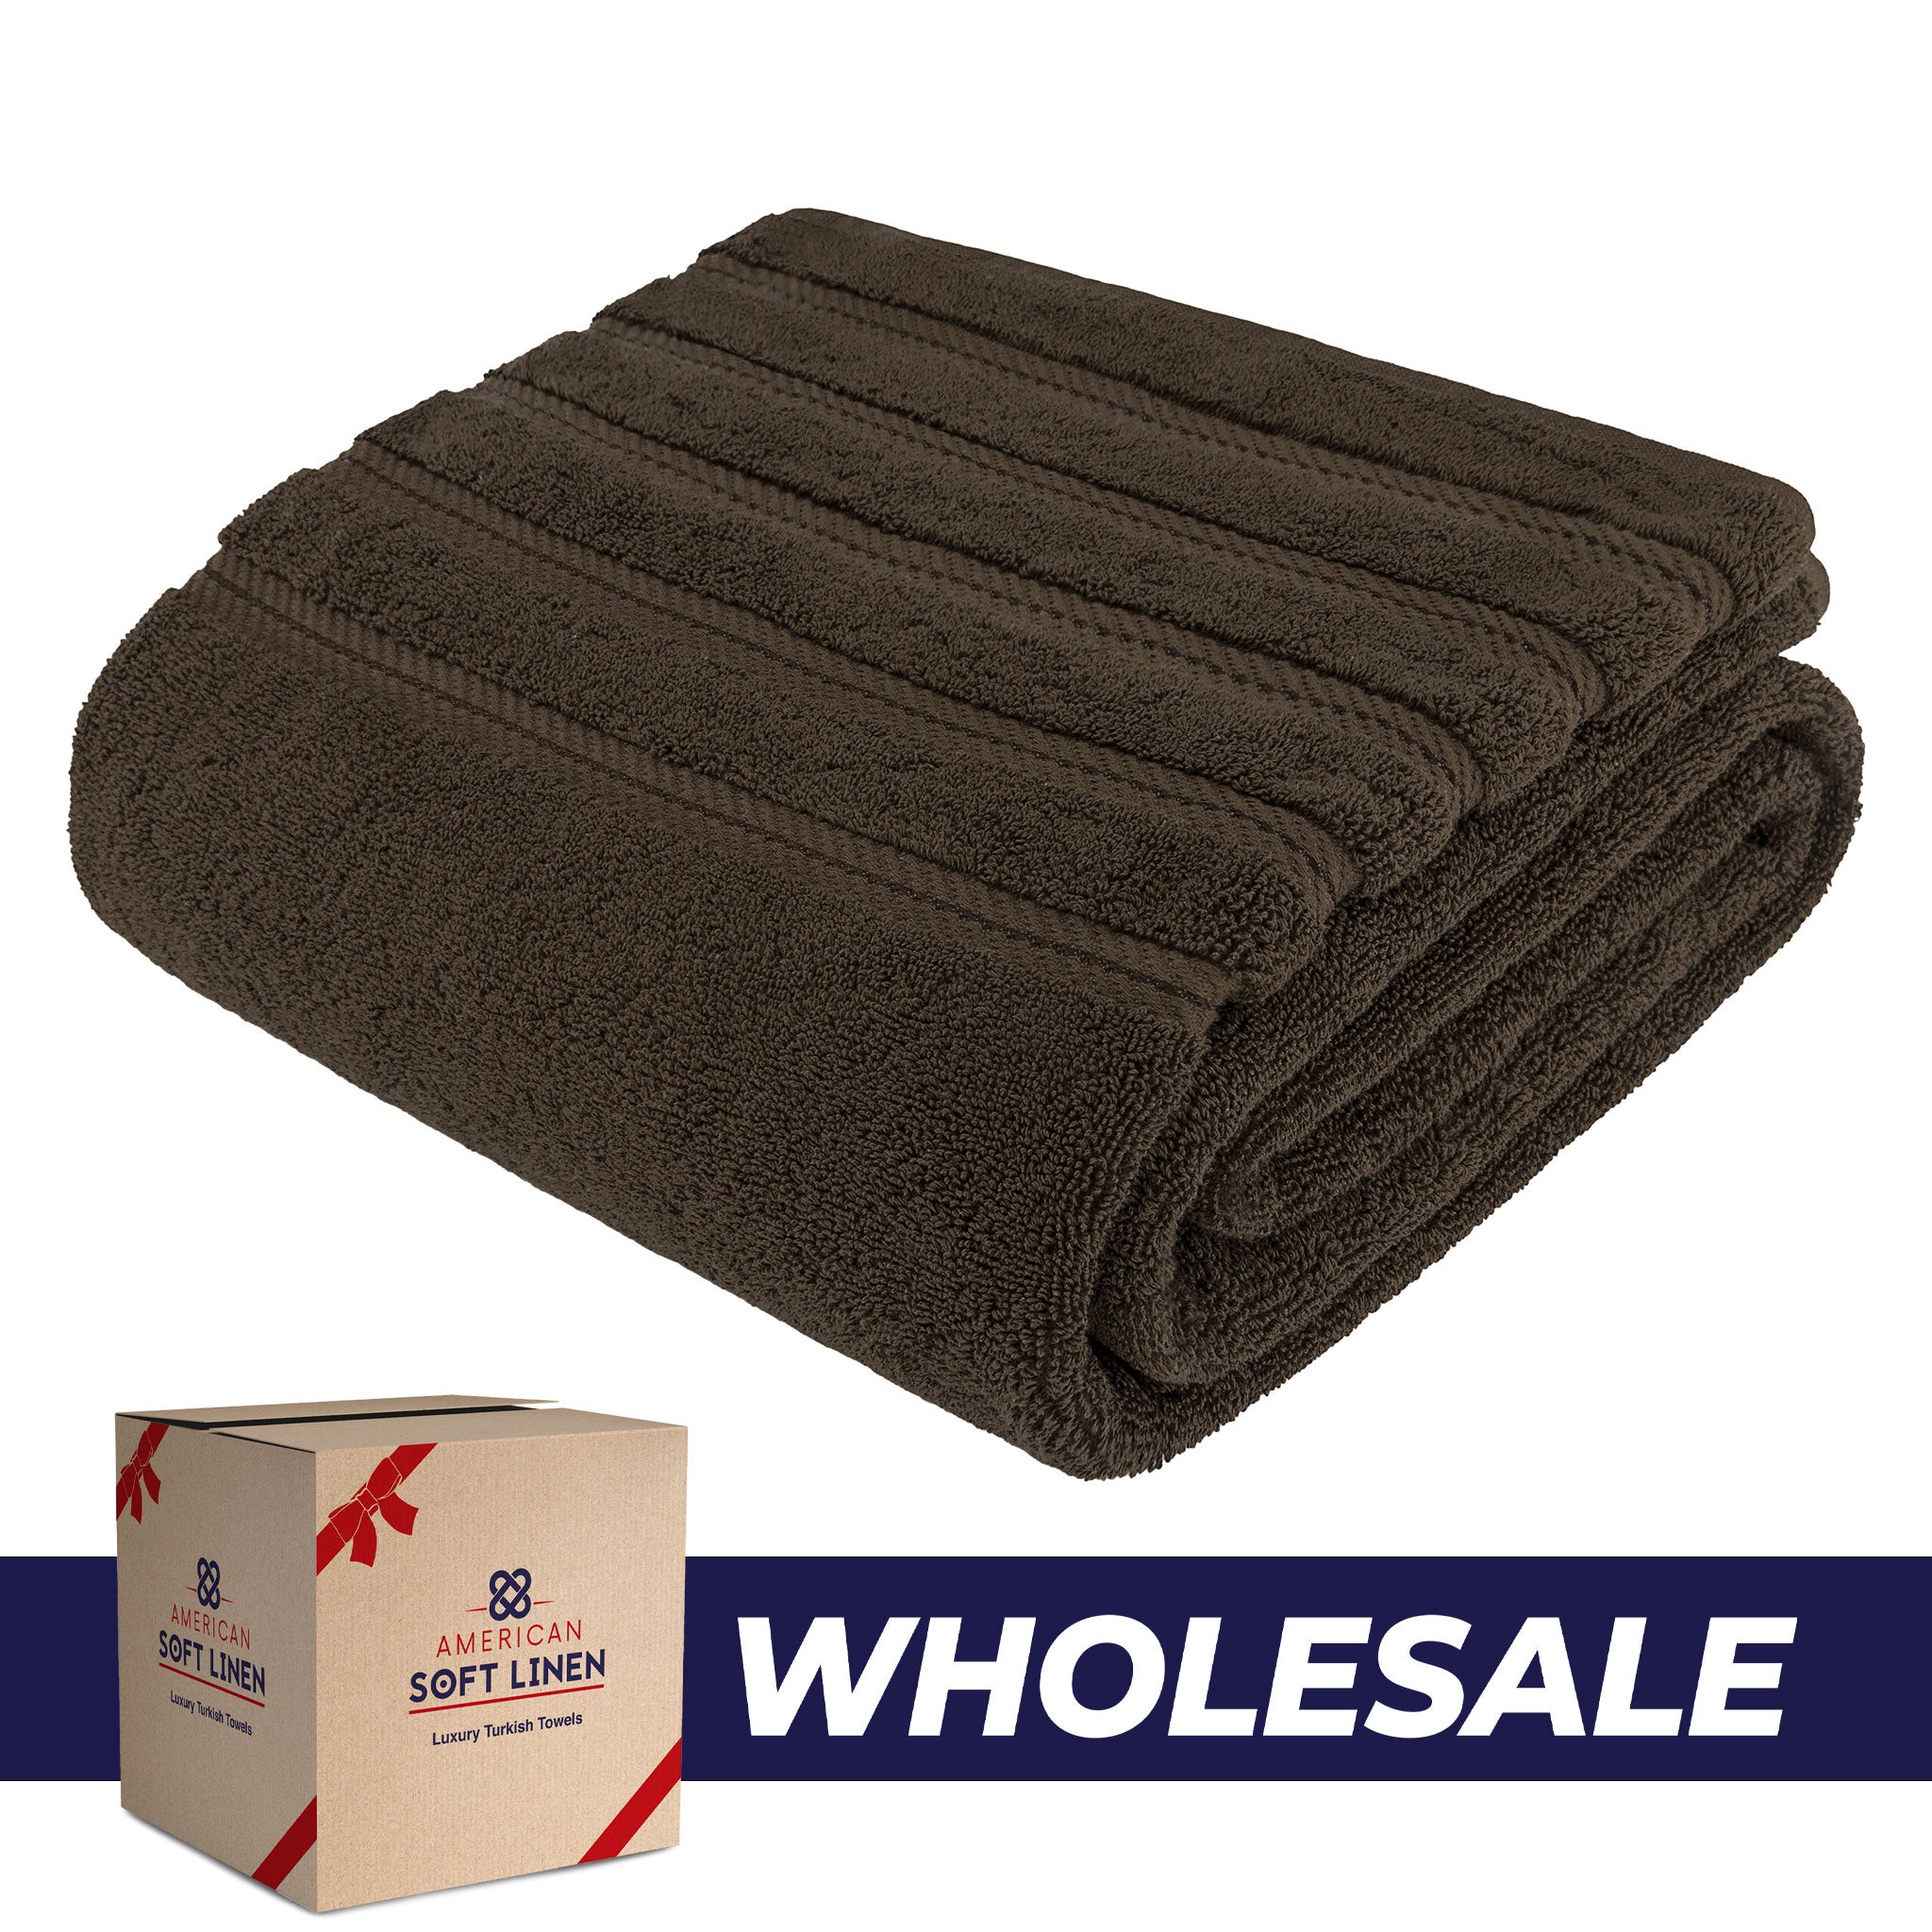 American Soft Linen - 35x70 Jumbo Bath Sheet Turkish Bath Towel - 16 Piece Case Pack - Chocolate-Brown - 0